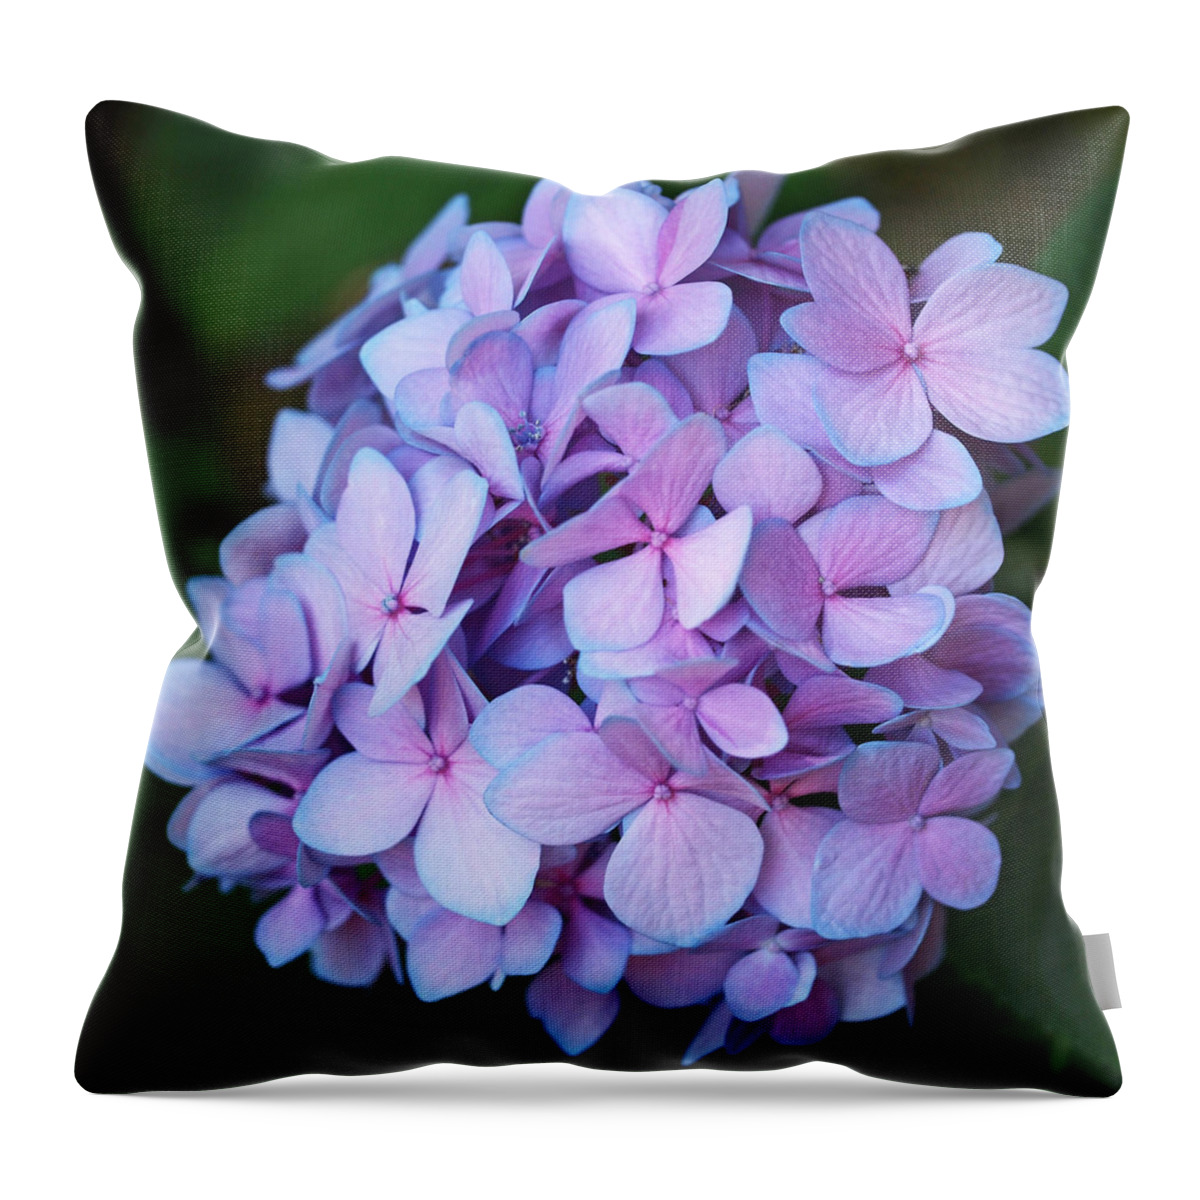 Hydrangea Throw Pillow featuring the photograph Hydrangea by Rona Black